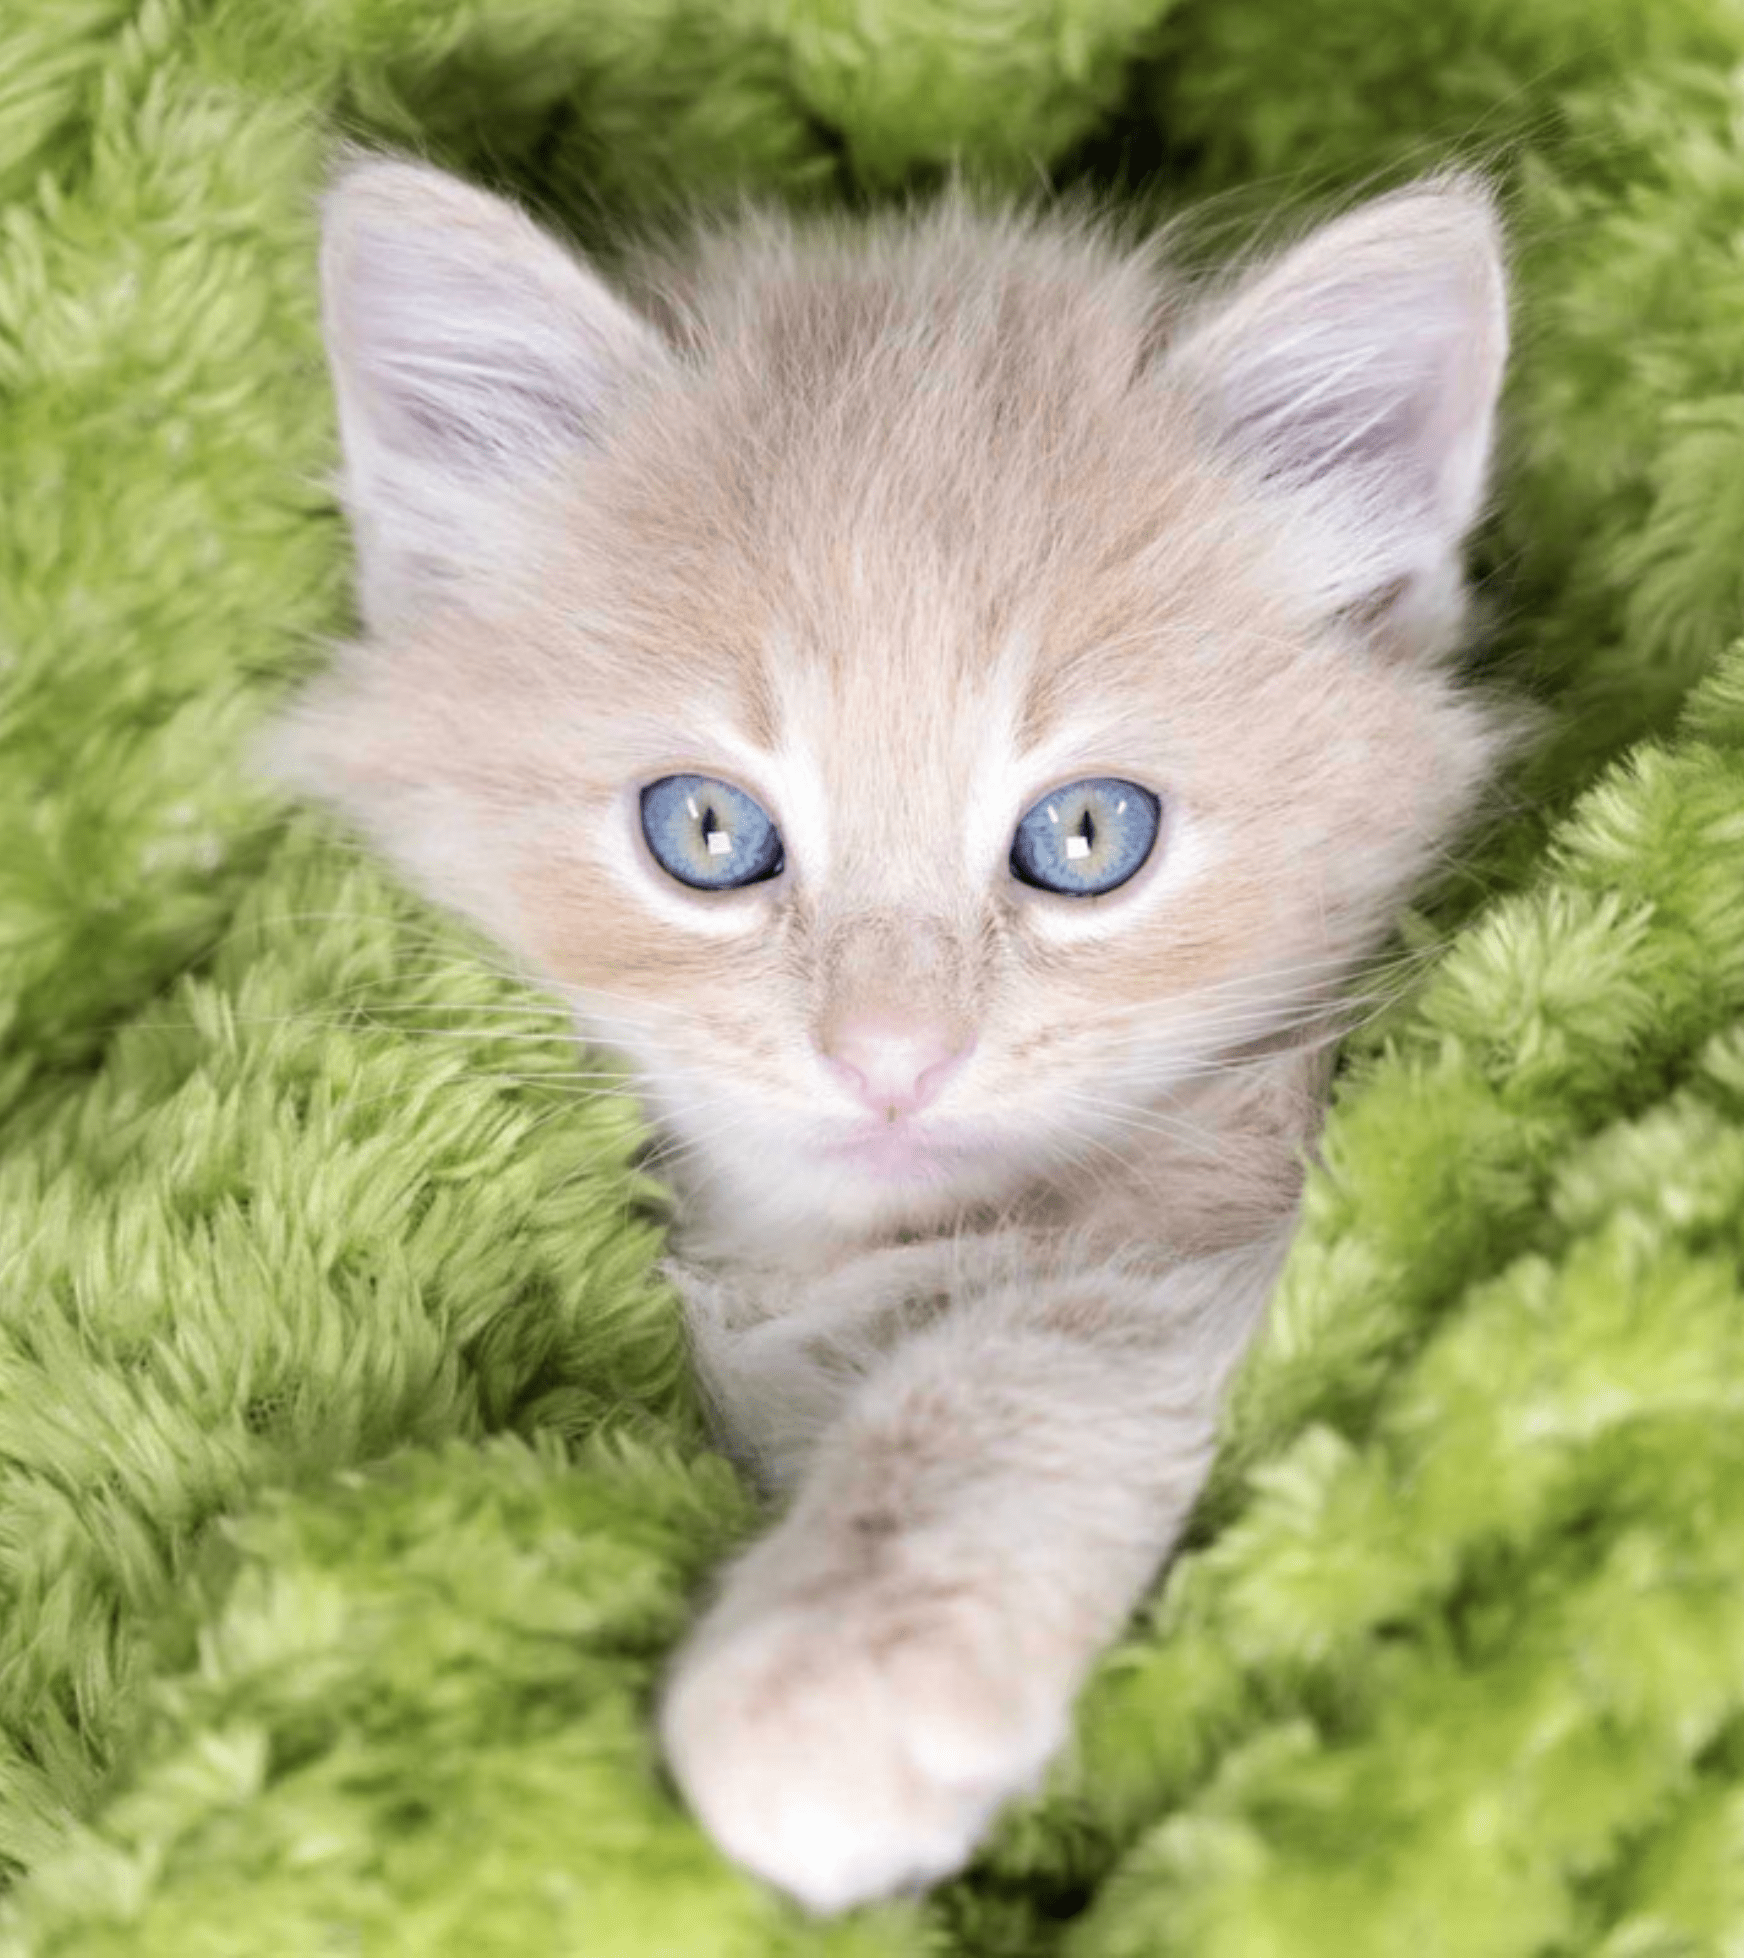 BeautifulTogether Animal Sanctuary adopt a kitten photo by Tamara Lackey Nikon